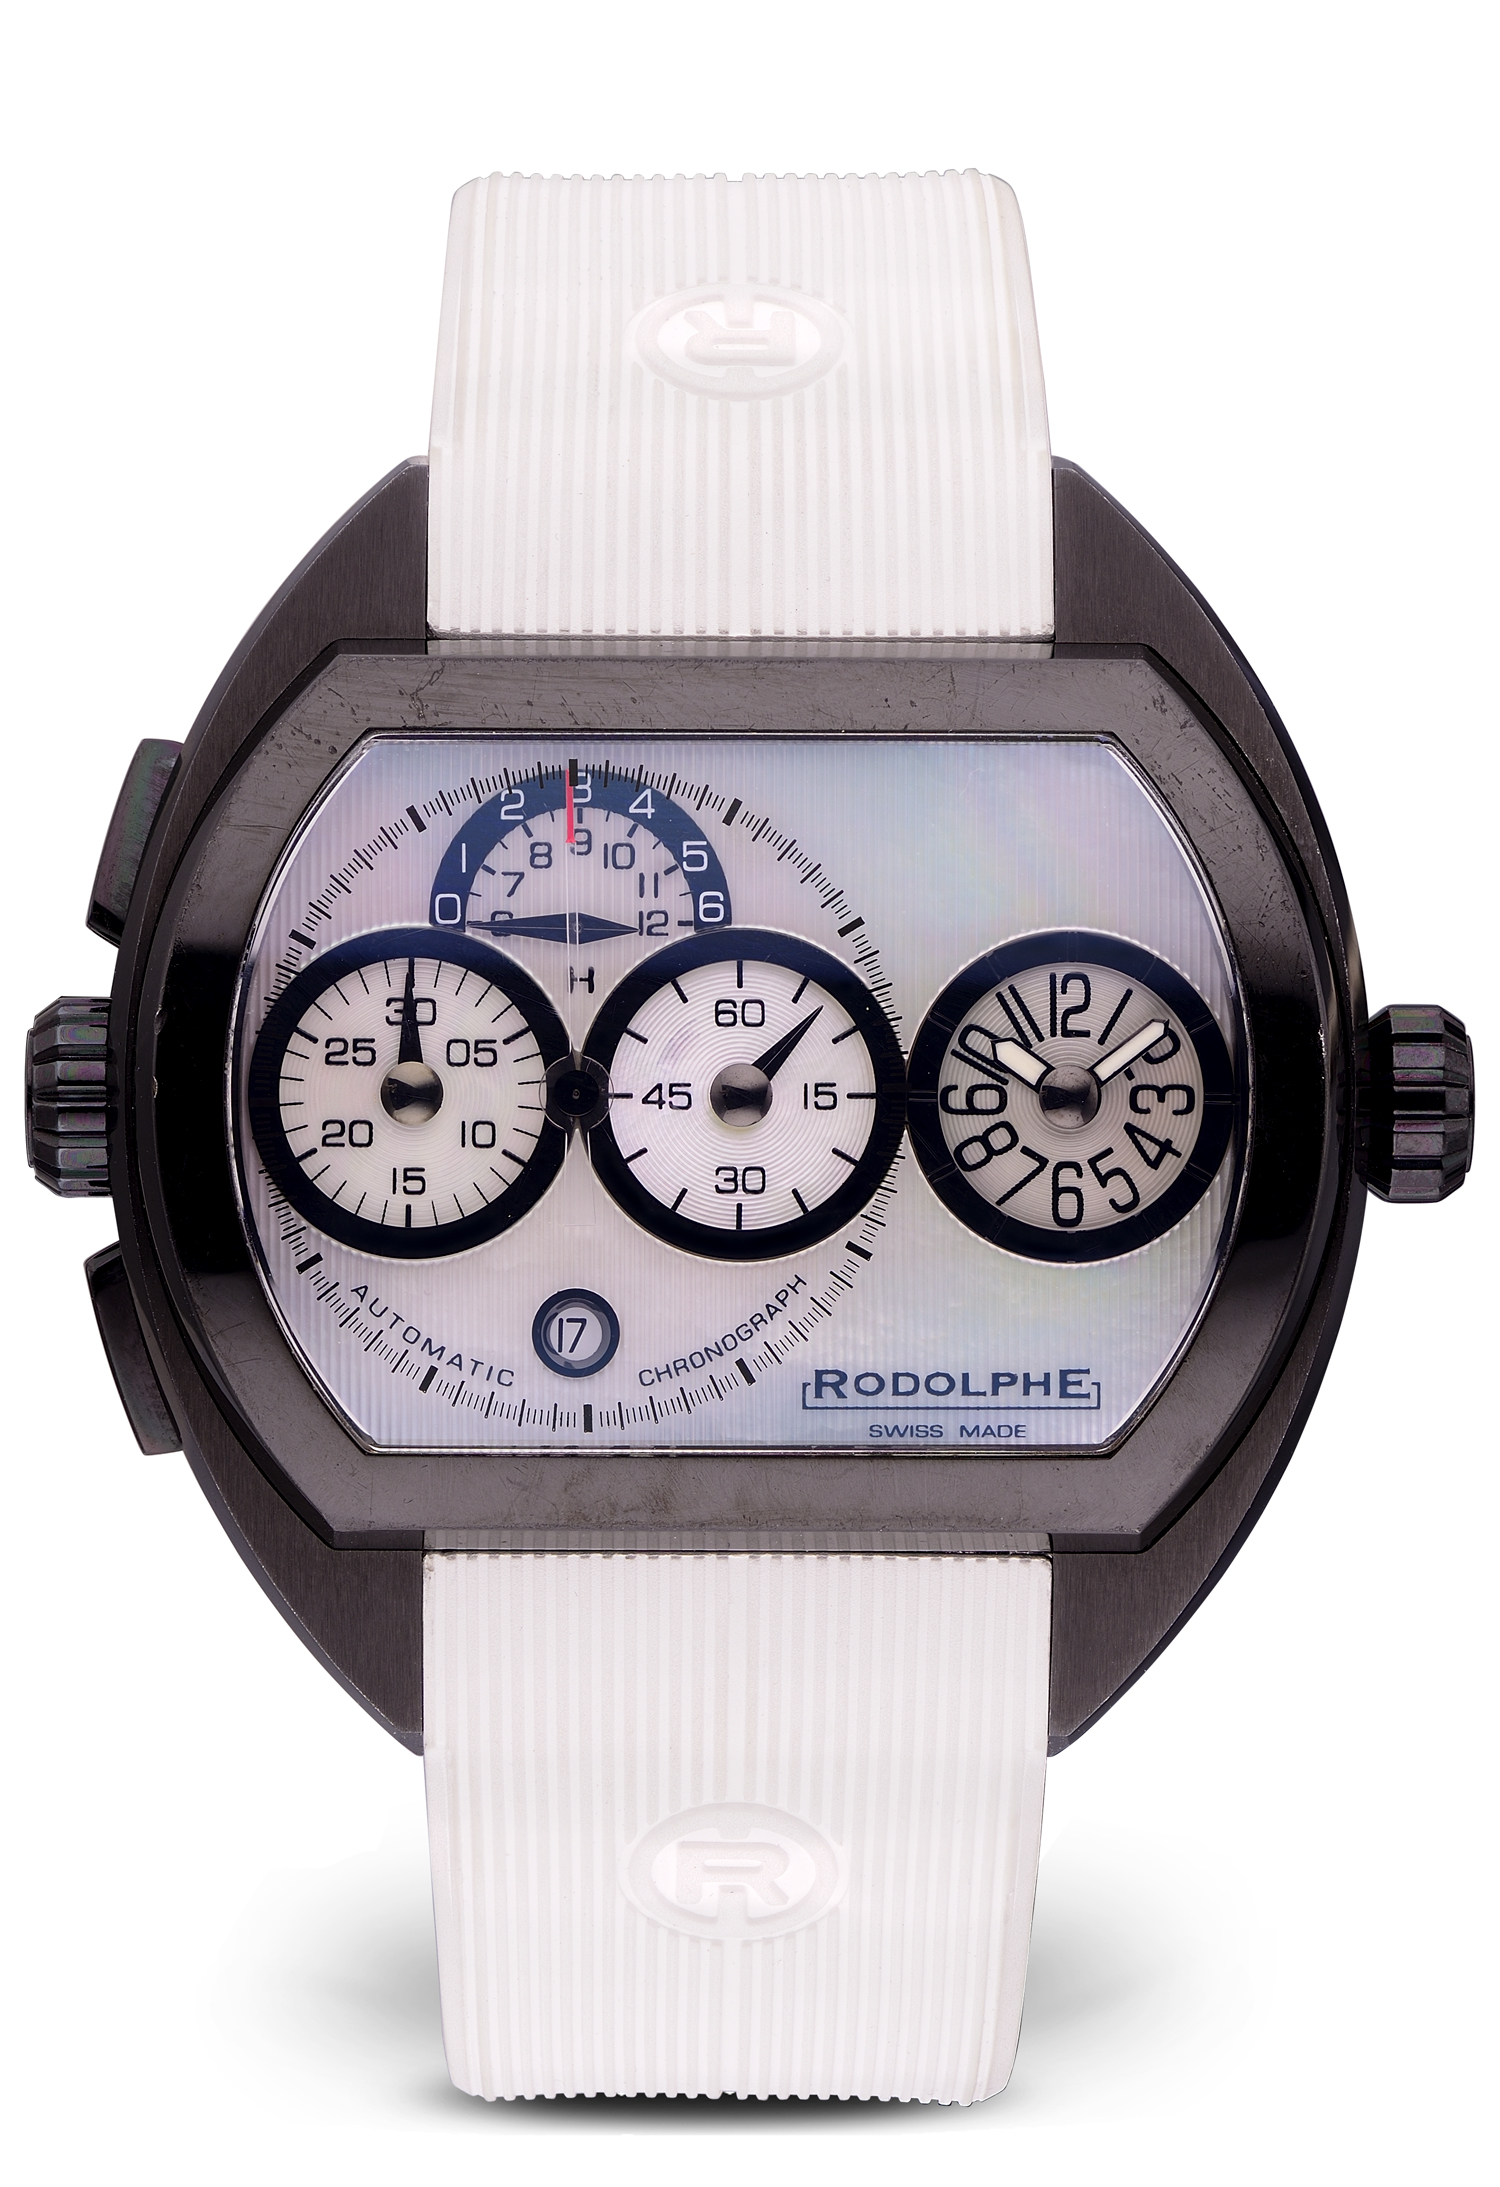 Швейцарские часы Rodolphe Instinct Chrono in.5053.cc.qz(988) №2